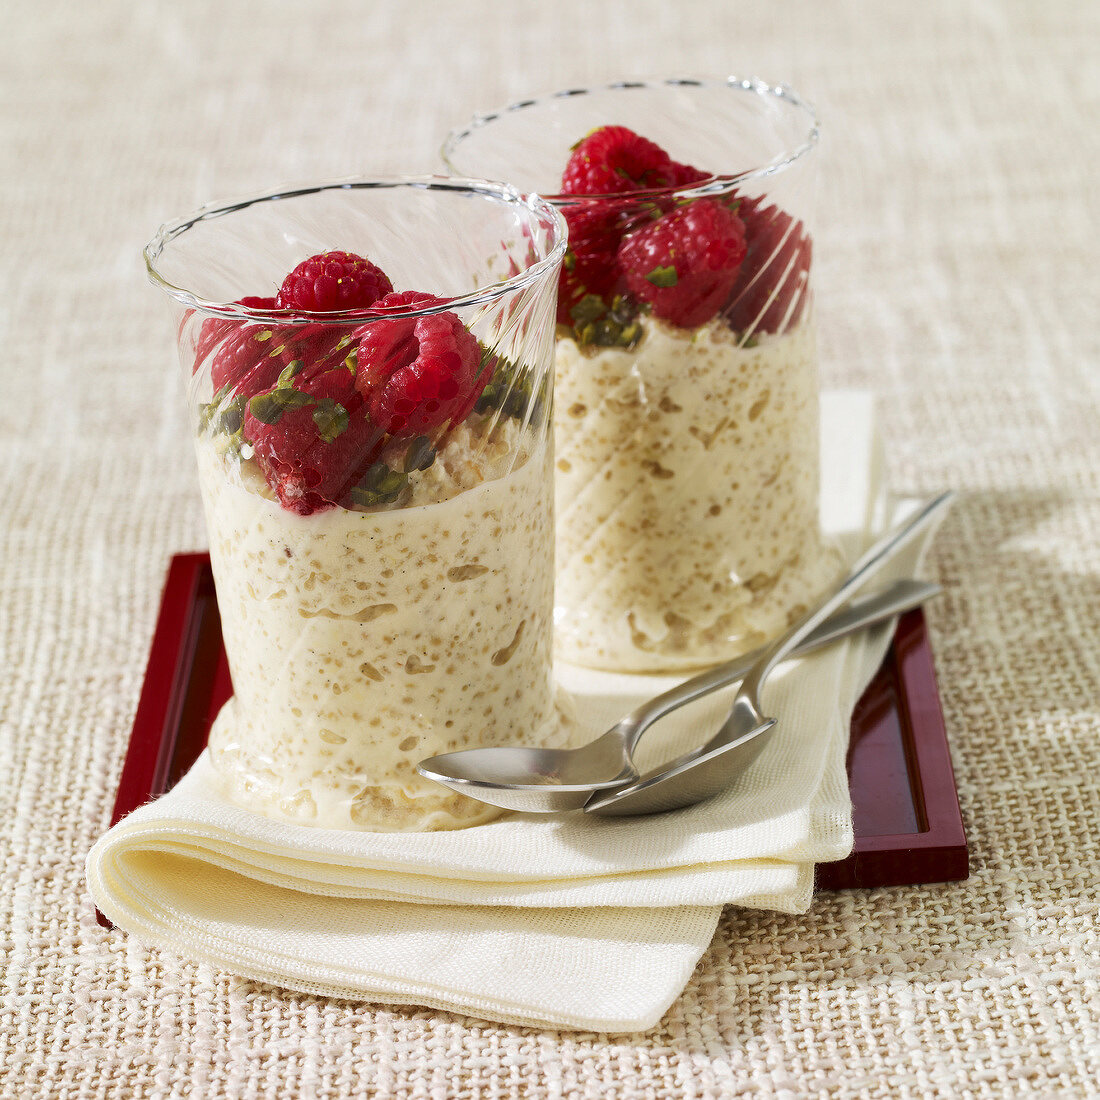 Vanilla quinoa pudding with raspberries and pistachios